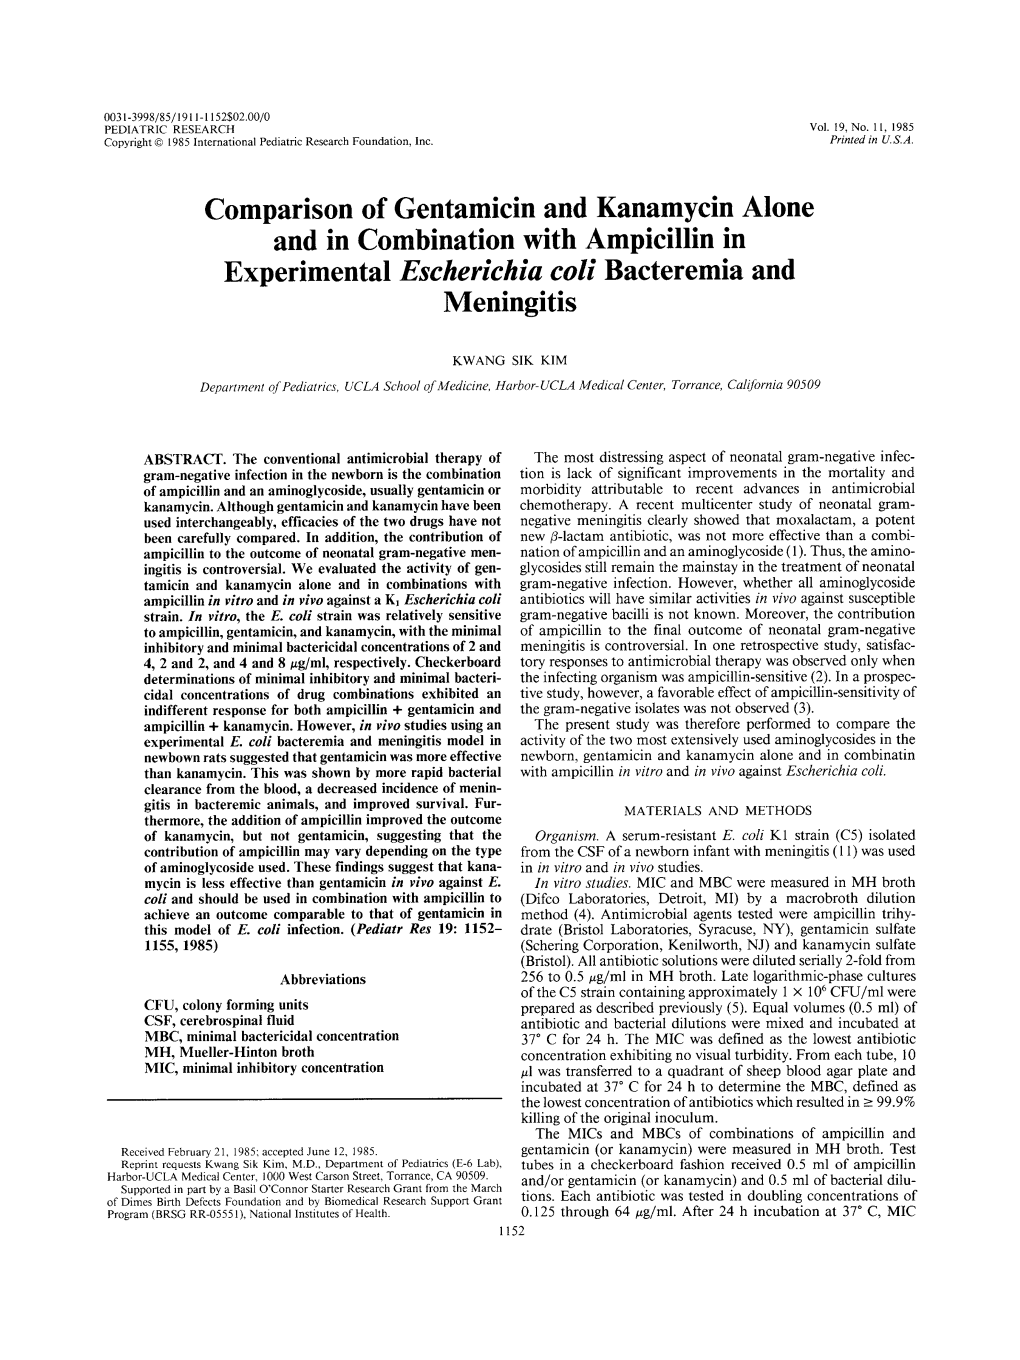 Comparison of Gentamicin and Kanamycin Alone and in Combination with Ampicillin in Experimental Escherichia Coli Bacteremia and Meningitis